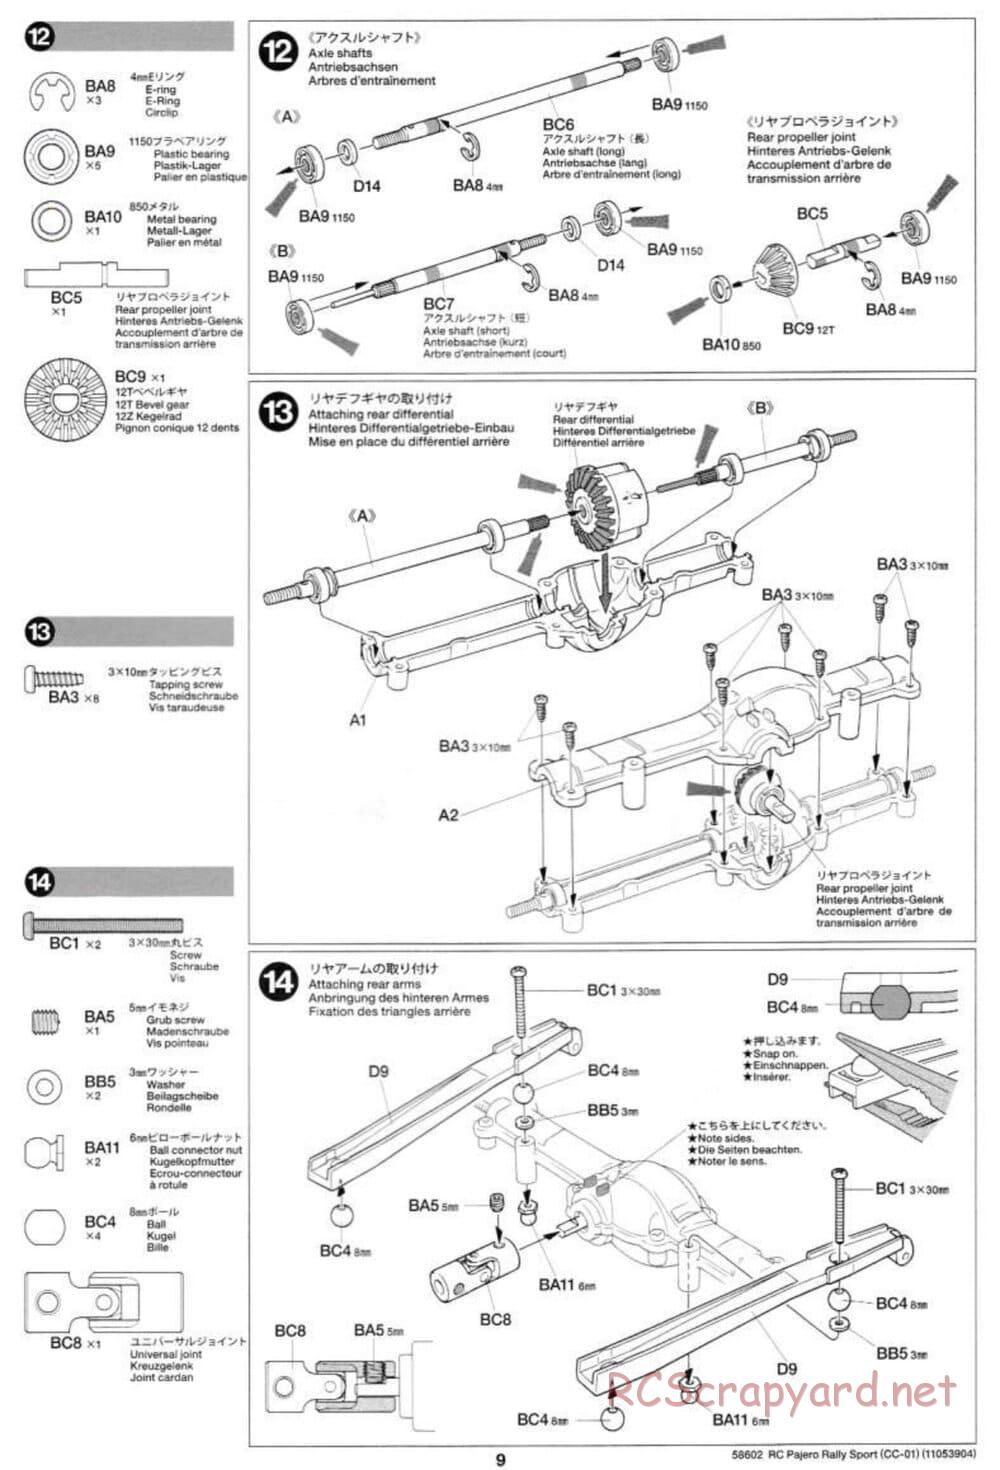 Tamiya - Mitsubishi Pajero Rally Sport - CC-01 Chassis - Manual - Page 9